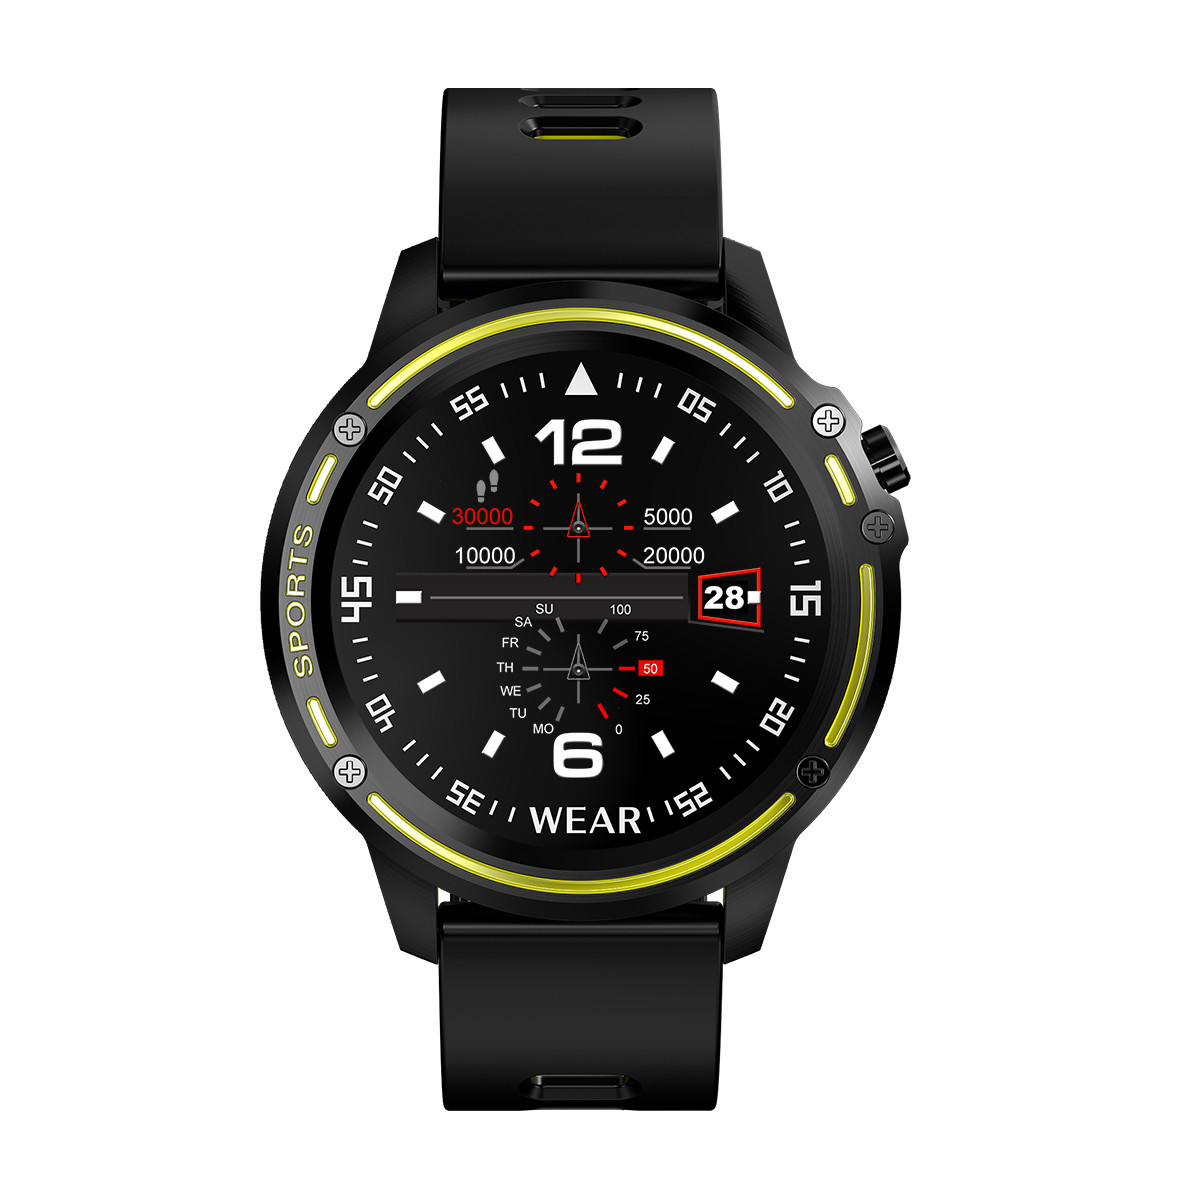  PPG HRV SPO2 Sleep Monitor NRF52832 ECG Smart Watches Manufactures